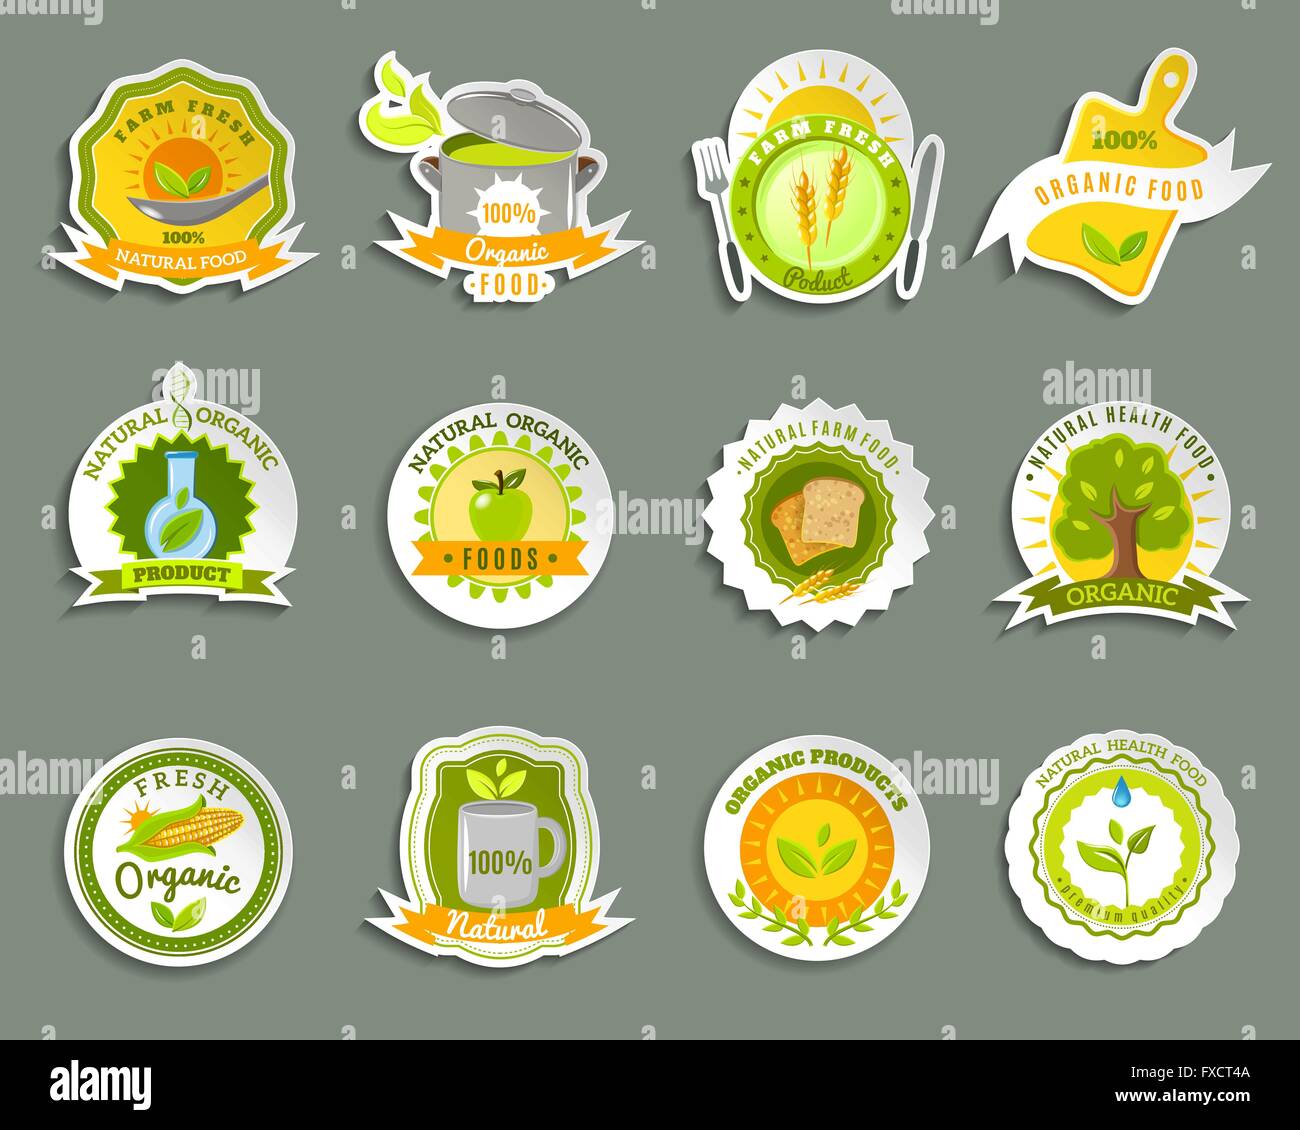 Natürliche Bio-Lebensmittel Marken Sticker set Stock-Vektorgrafik